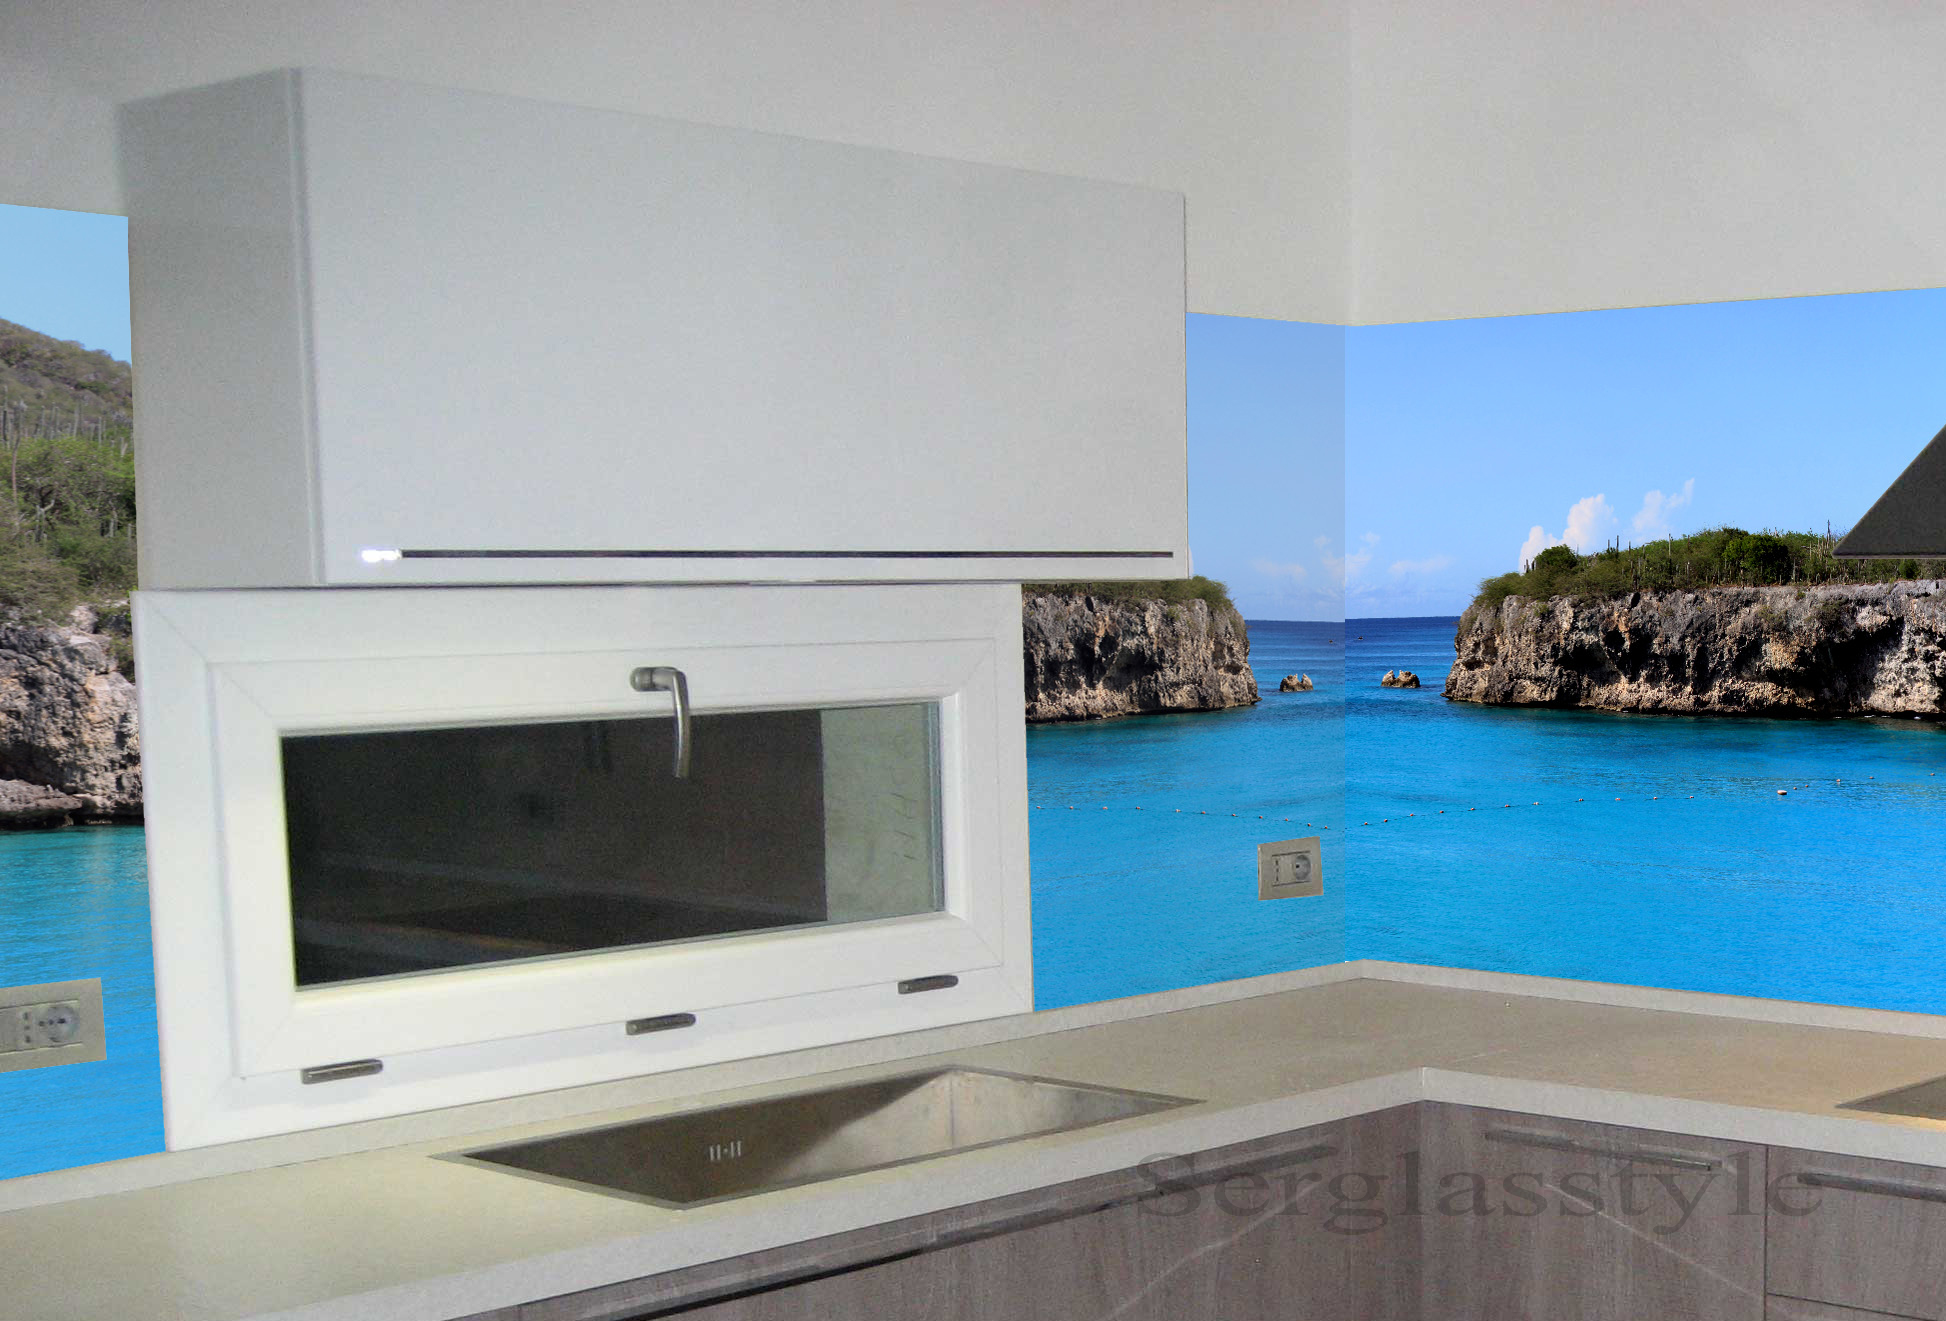 quadro venezia in vetro immagini stampati serglasstylecucina moderna casa moderna ristrutturazione casa cucina detrazione fiscale lavori in casa vetri cucina frontale cucina in vetro